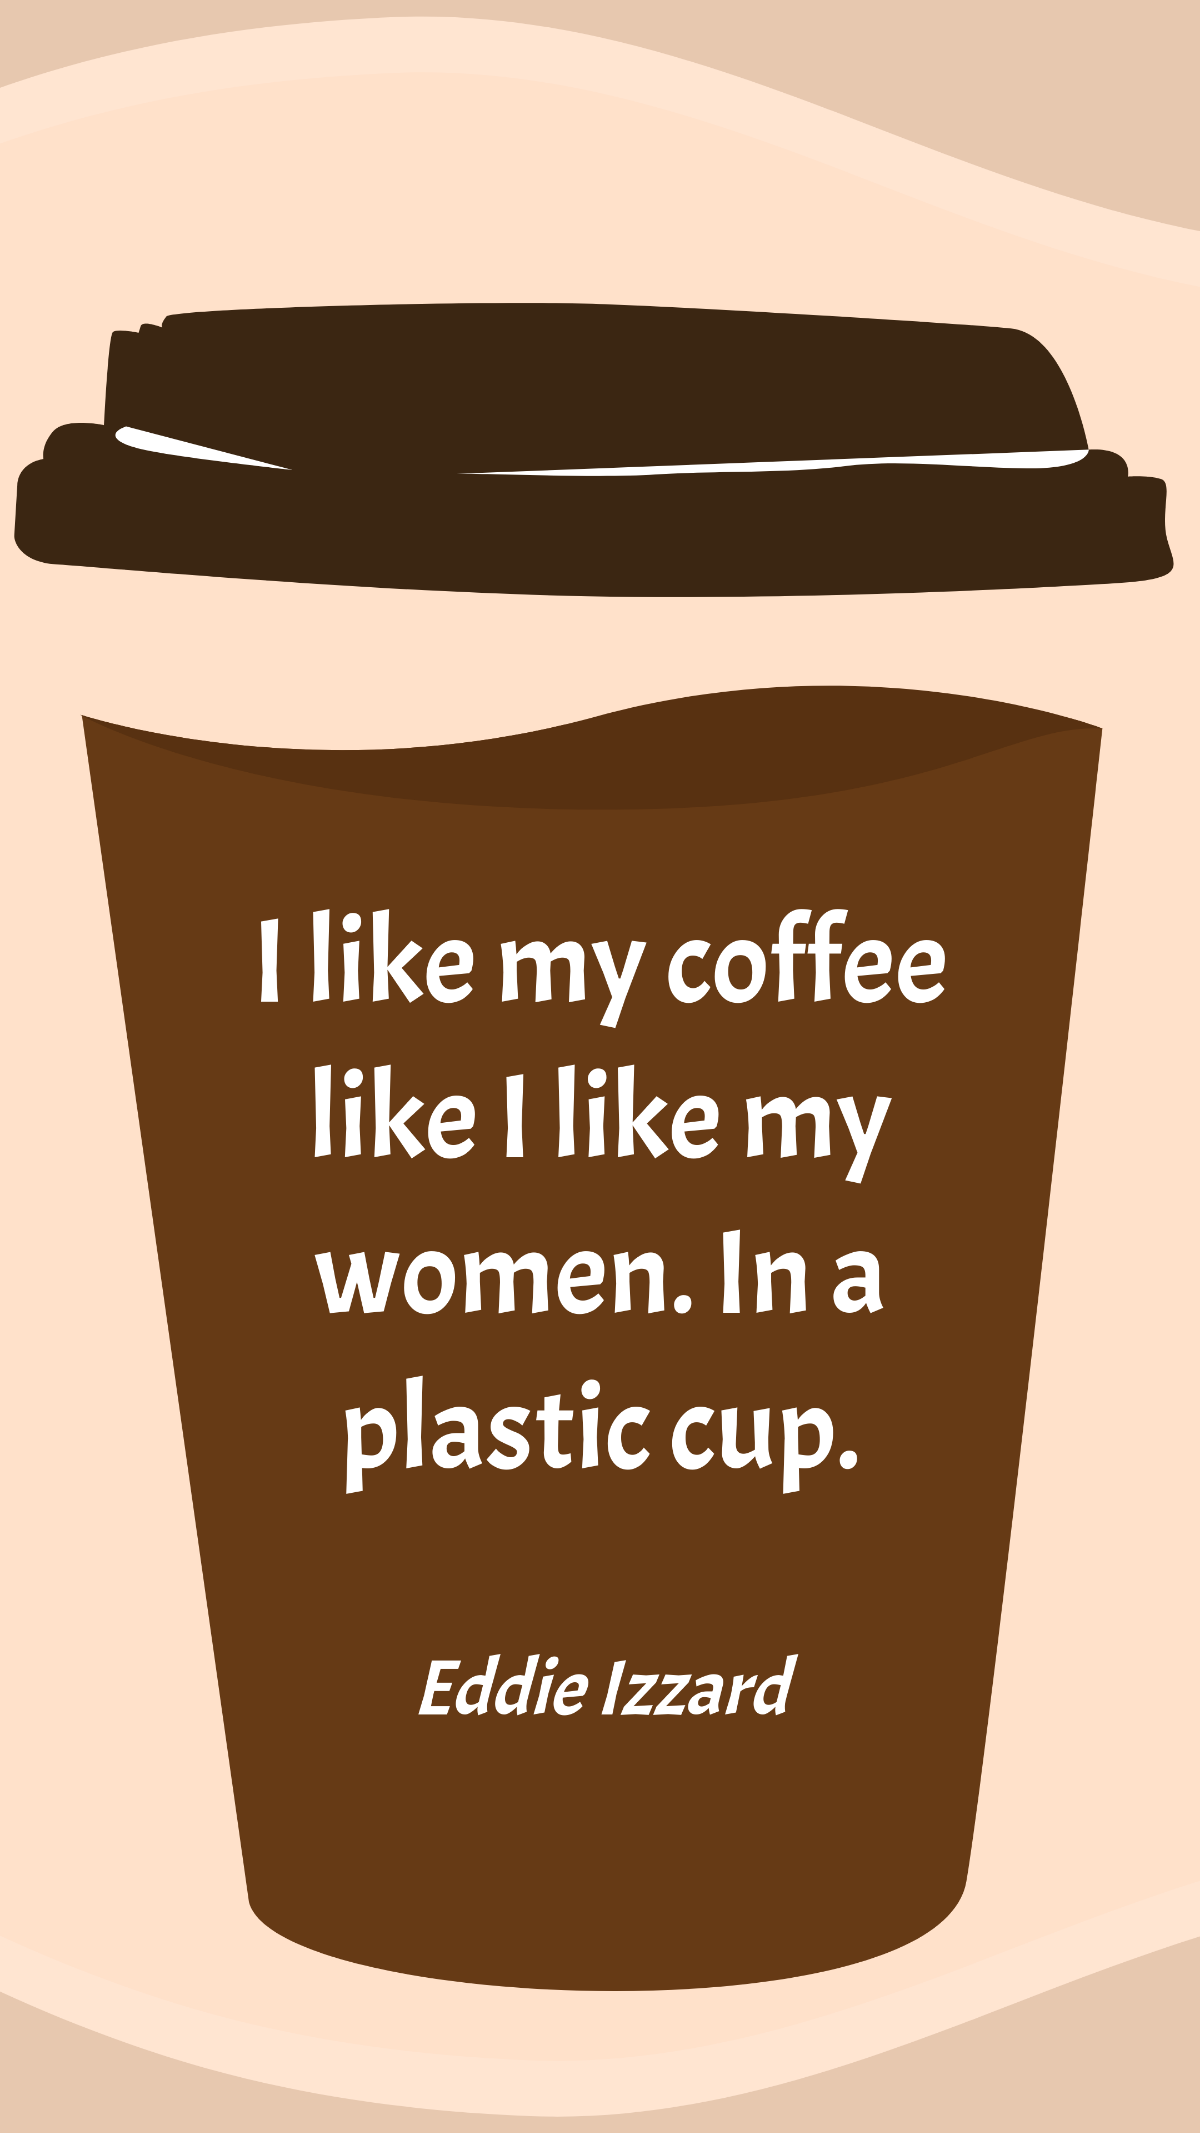 Free Eddie Izzard - I like my coffee like I like my women. In a plastic cup. Template